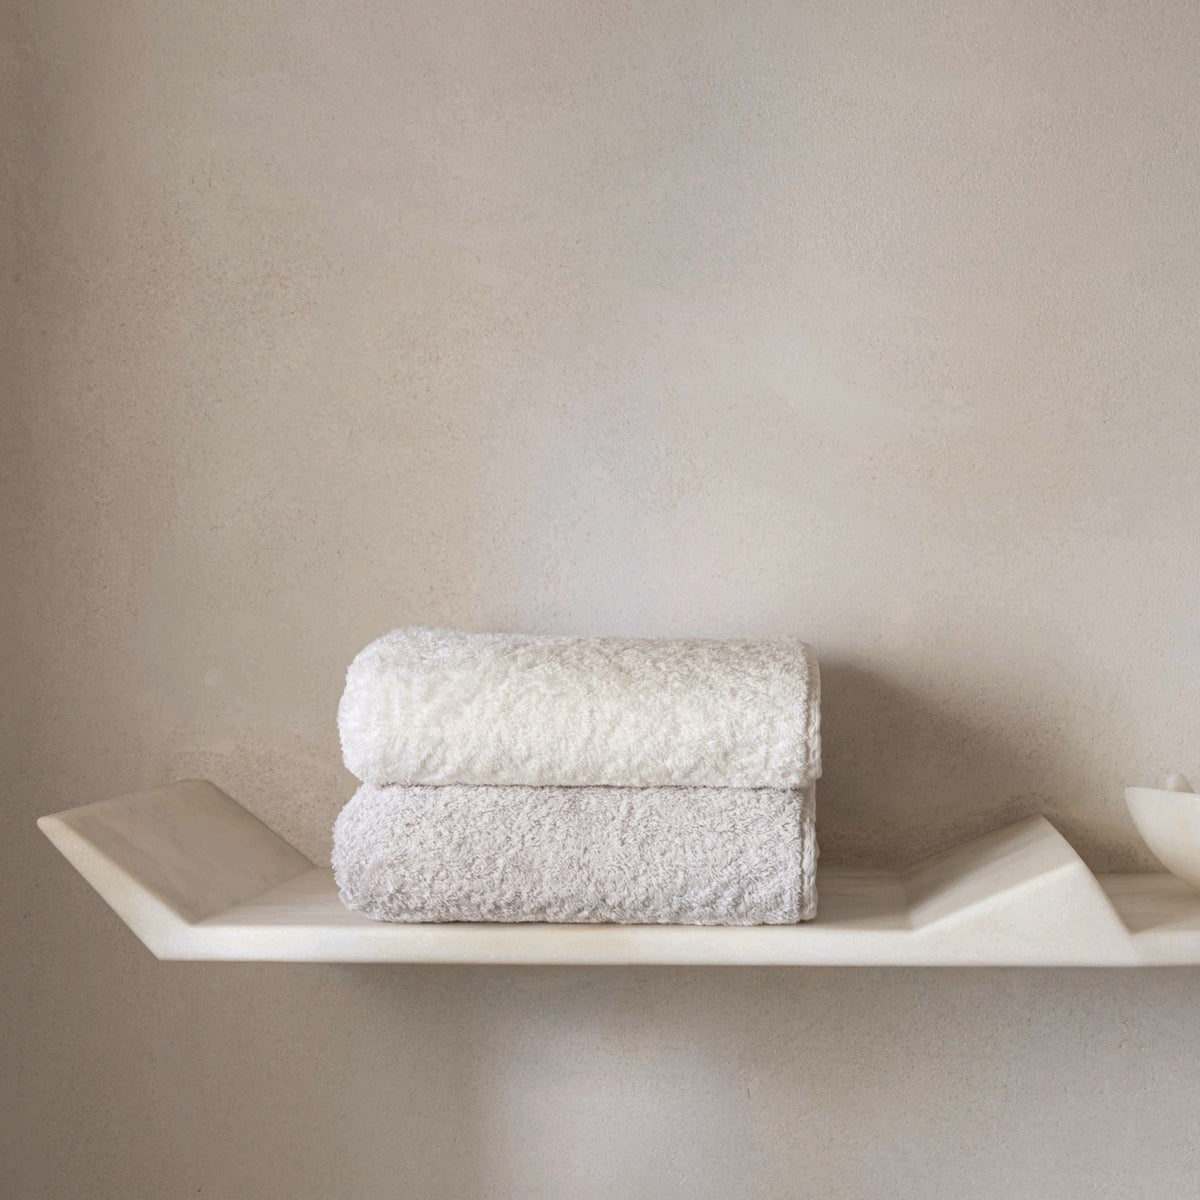 Folded Graccioza Grand Egoist Bath Towels in Lifestyle